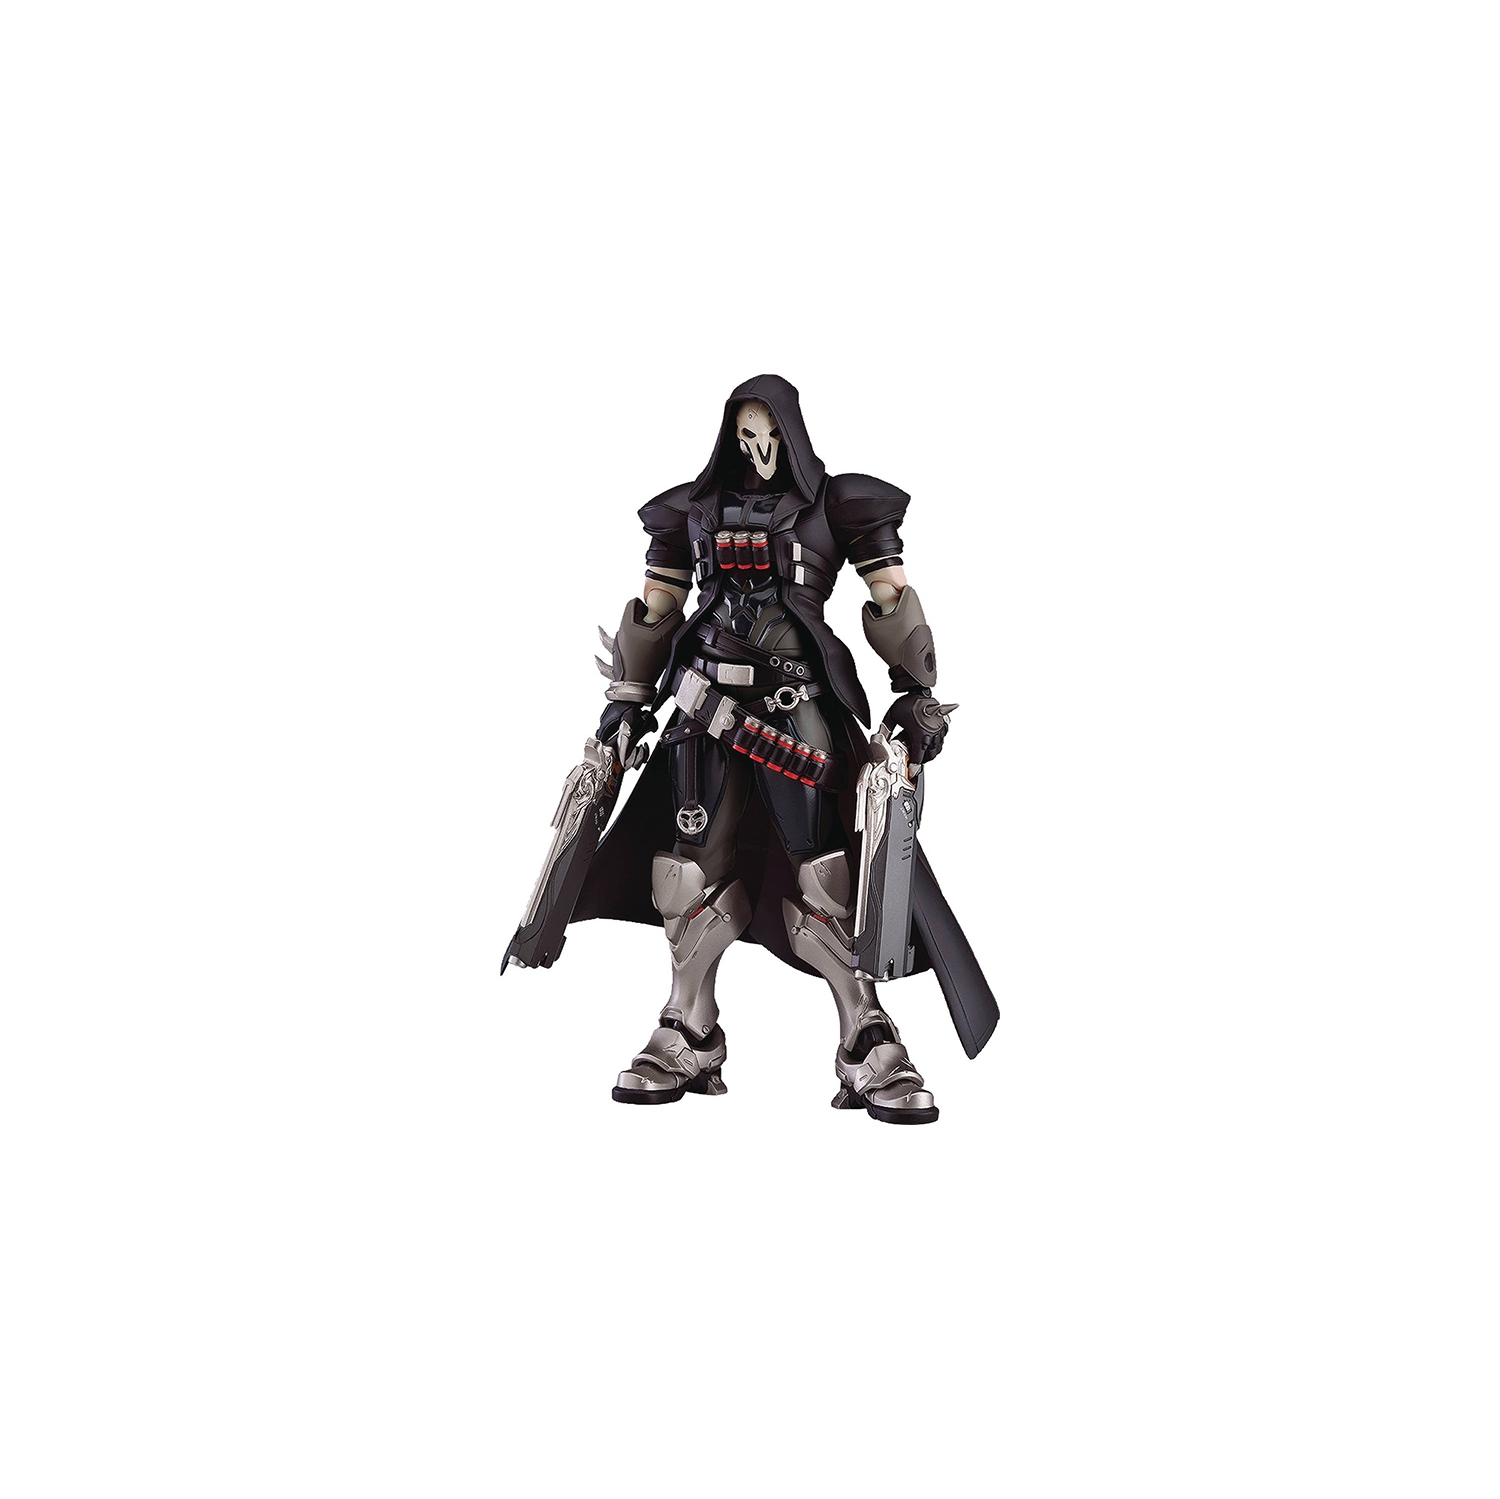 Overwatch 6 Inch Action Figure Figma Series - Reaper